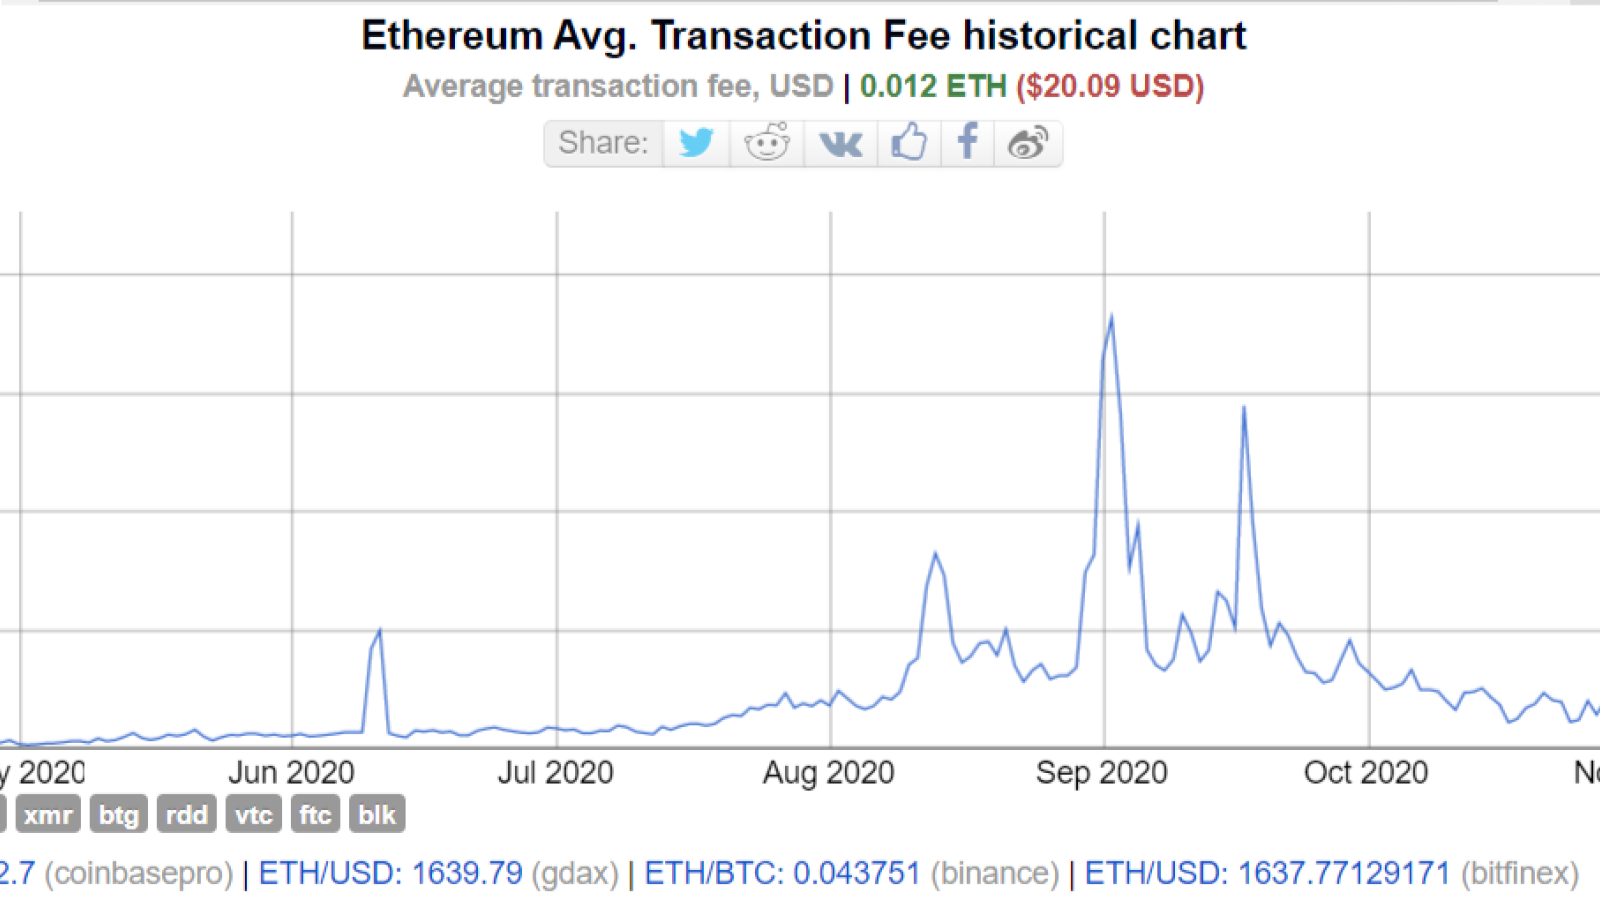 Average ETH transaction fees surpassed $20